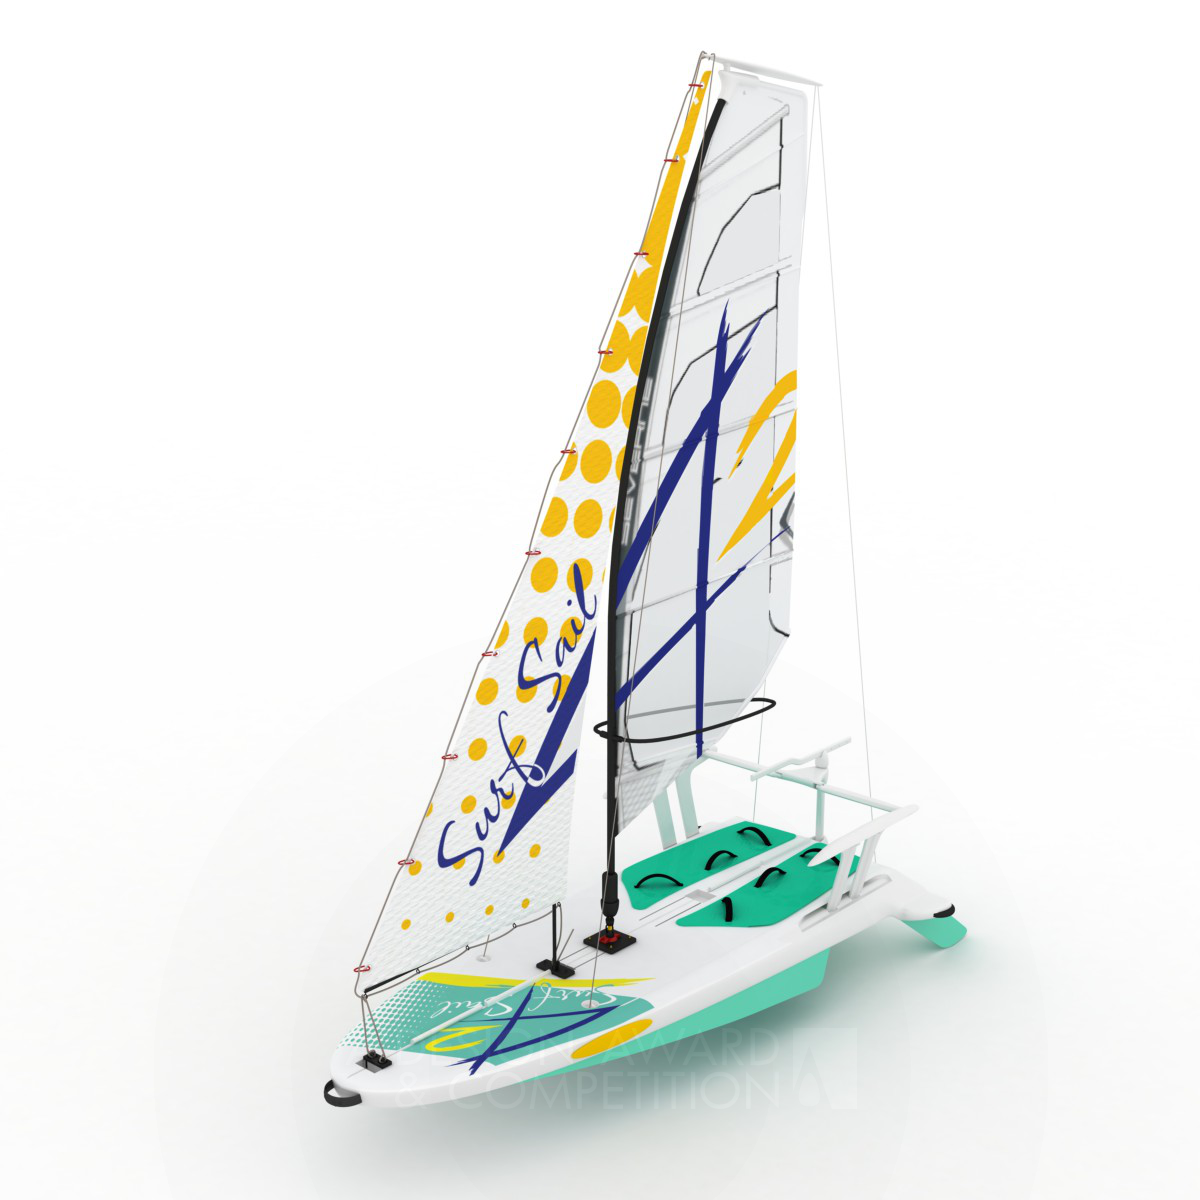 SurfSail42 <b>Sailboard for windsurfing and sailing